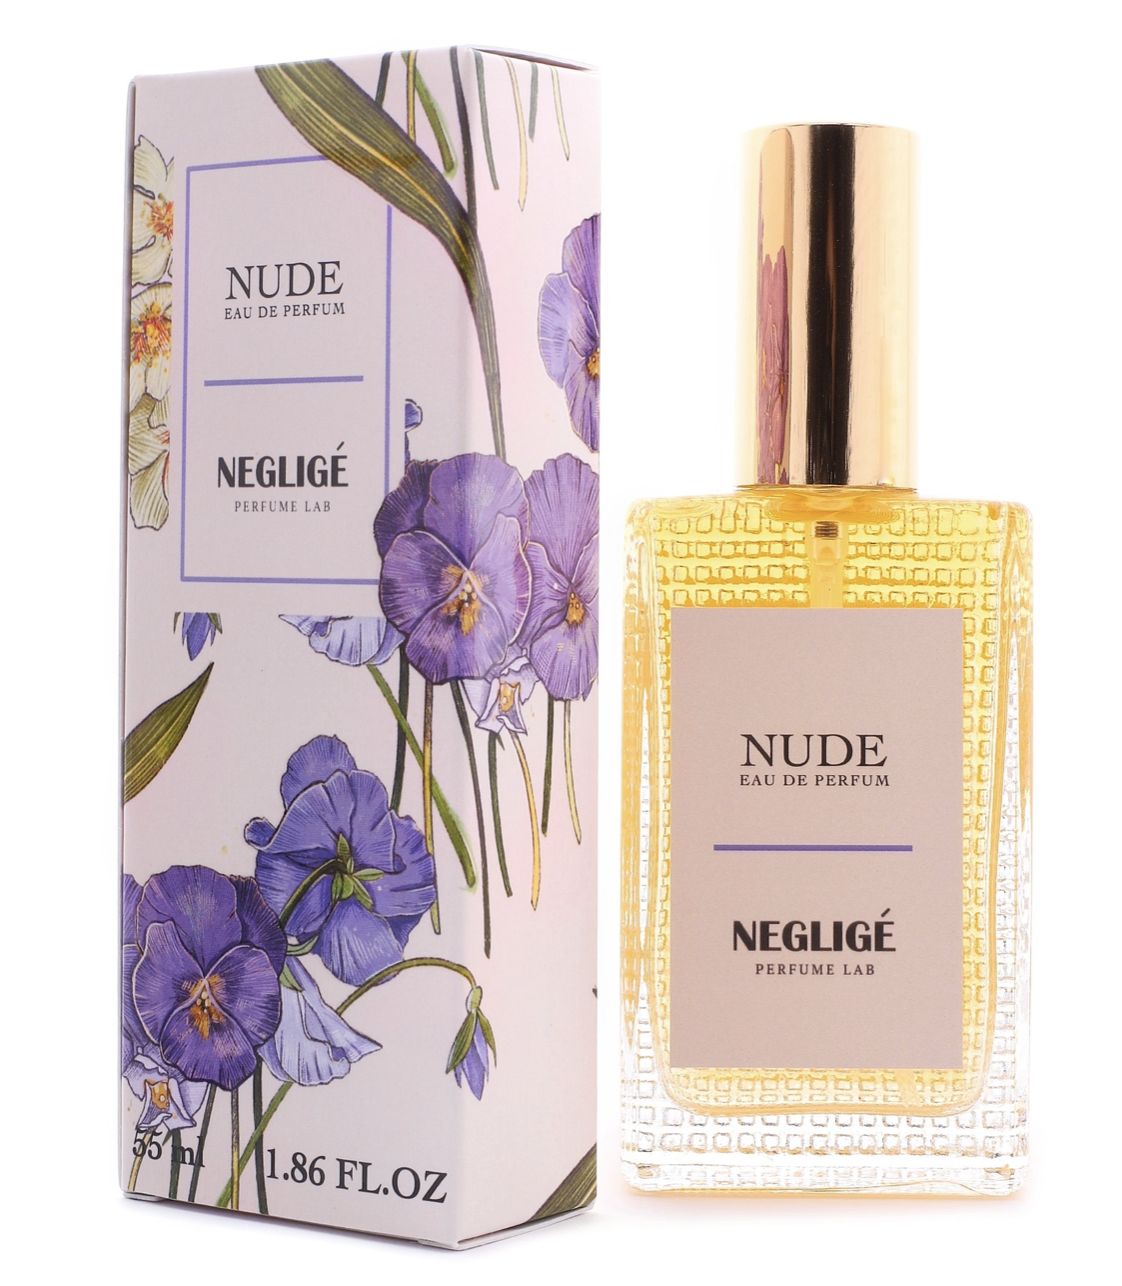 Nude Neglig Perfume Lab